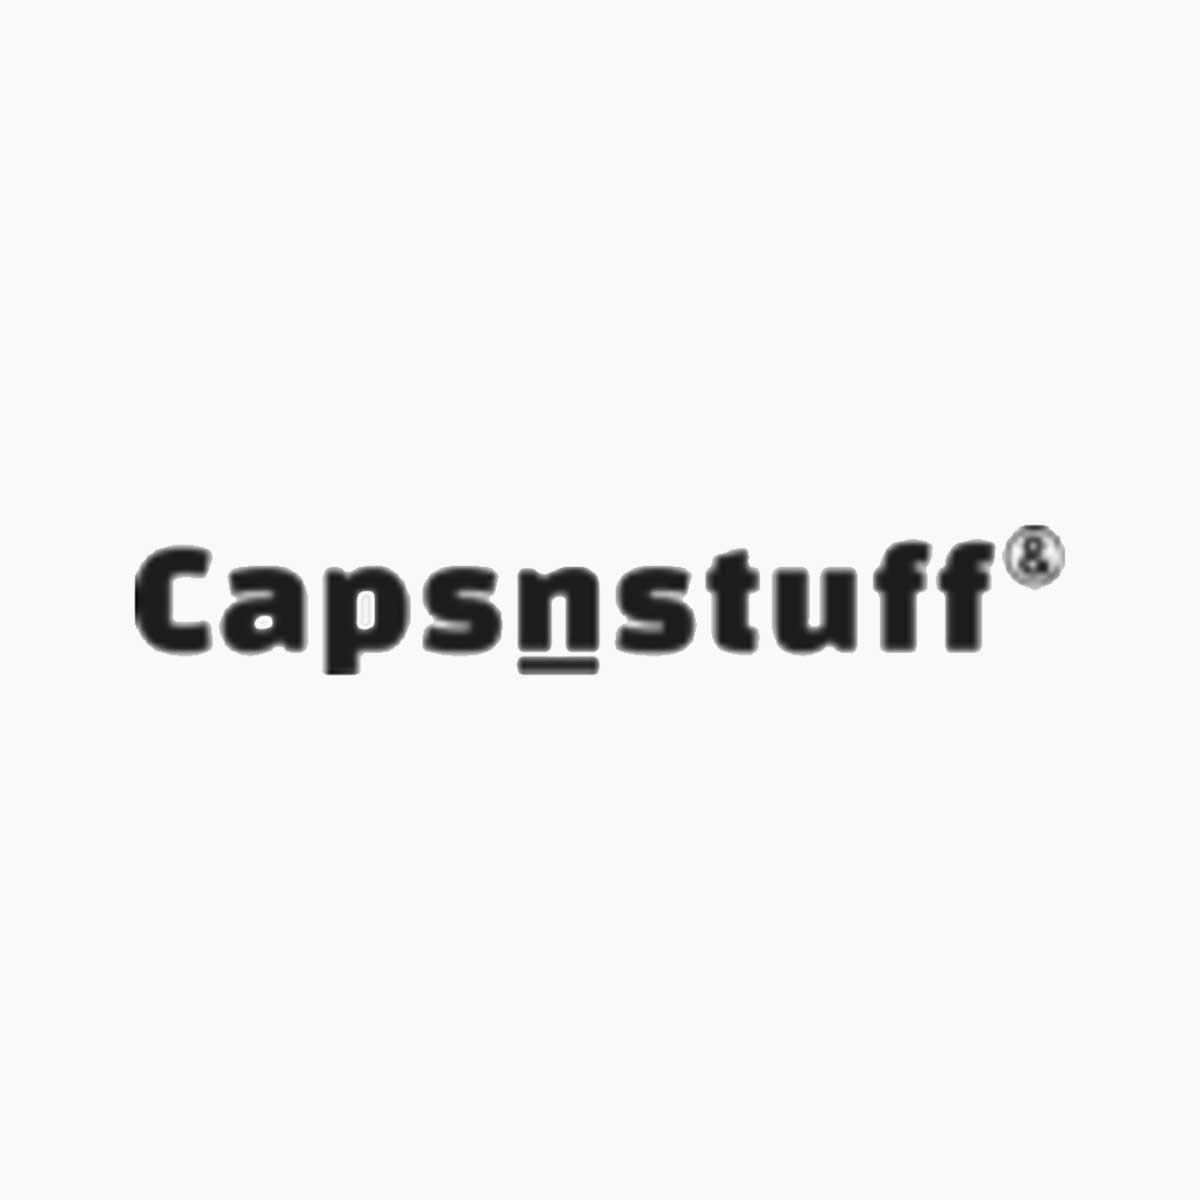 Capsnstuff